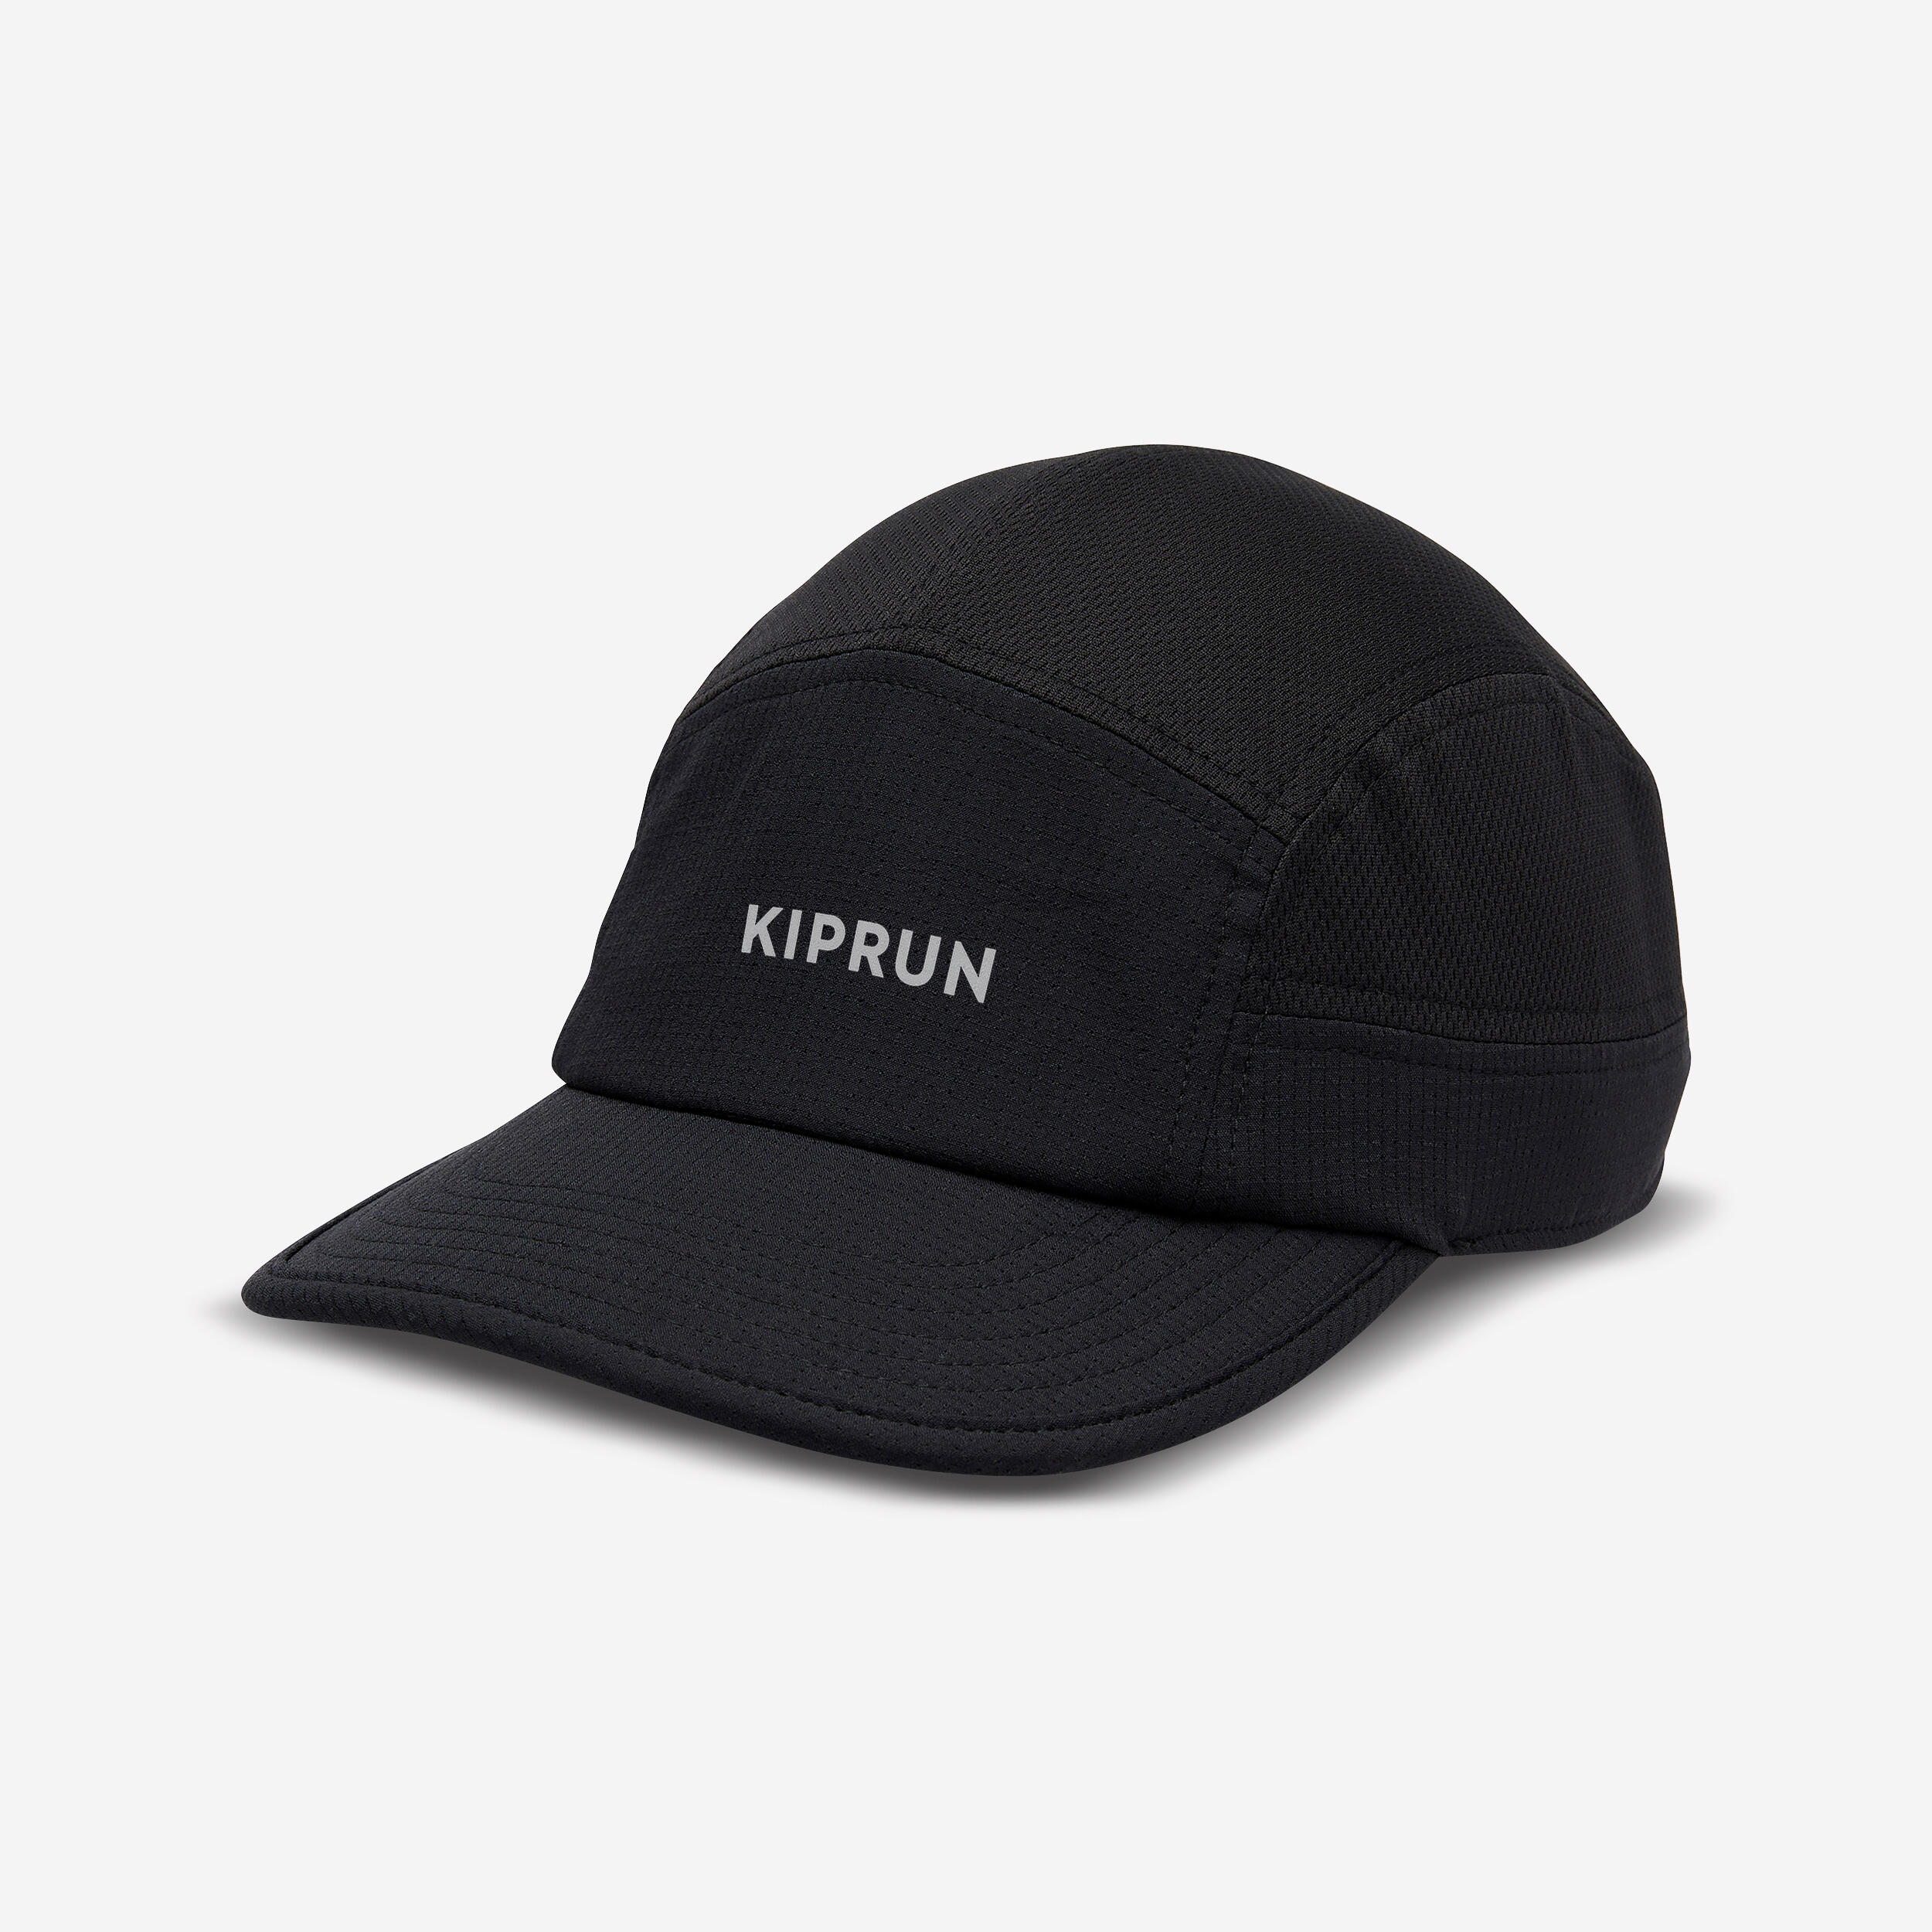 KIPRUN Unisex Running Cap - Kiprun 5 Panels Black